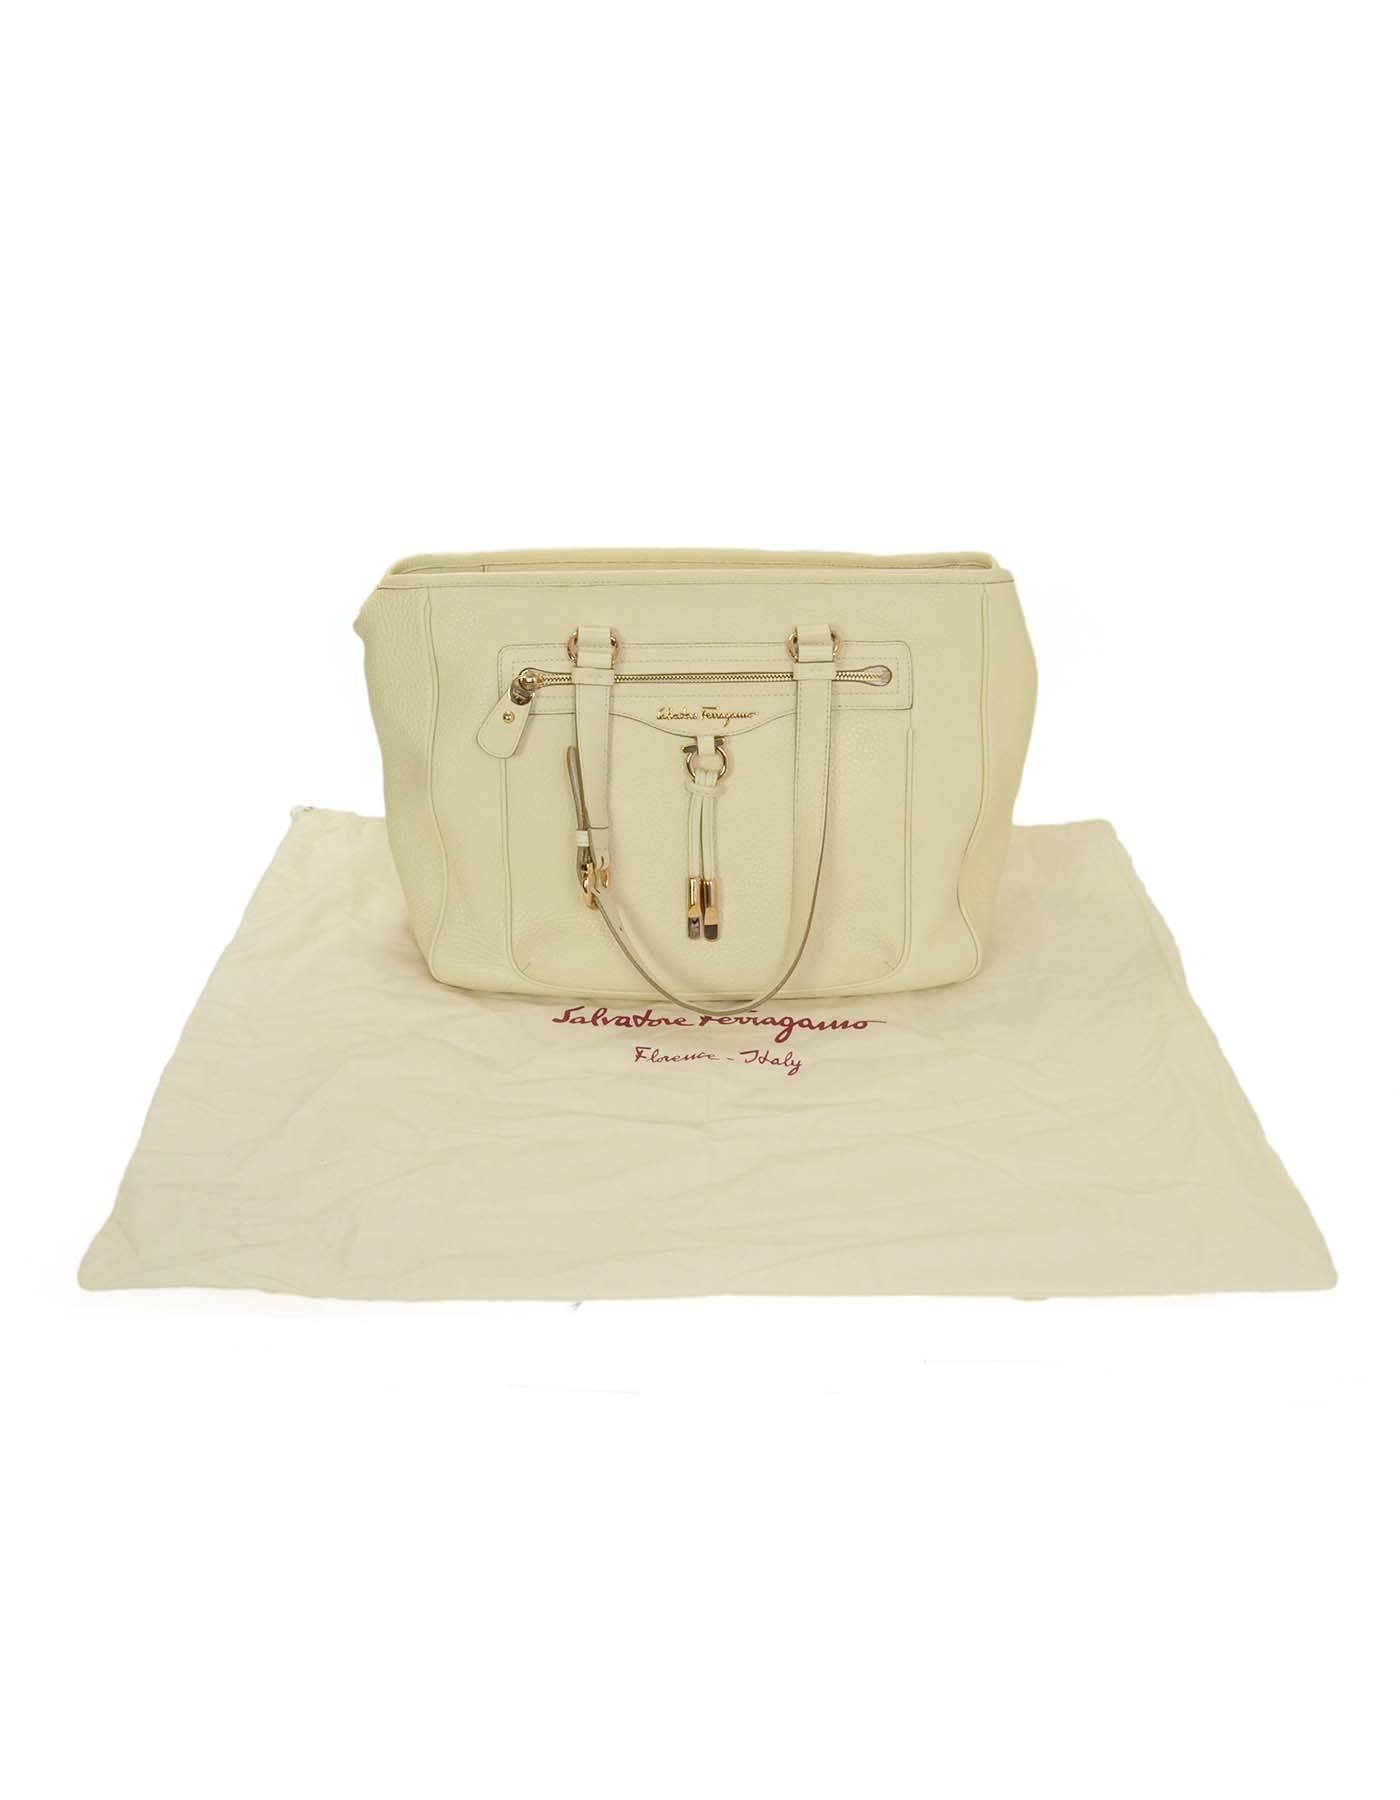 Salvatore Ferragamo Cream Leather Tote Bag GHW 6